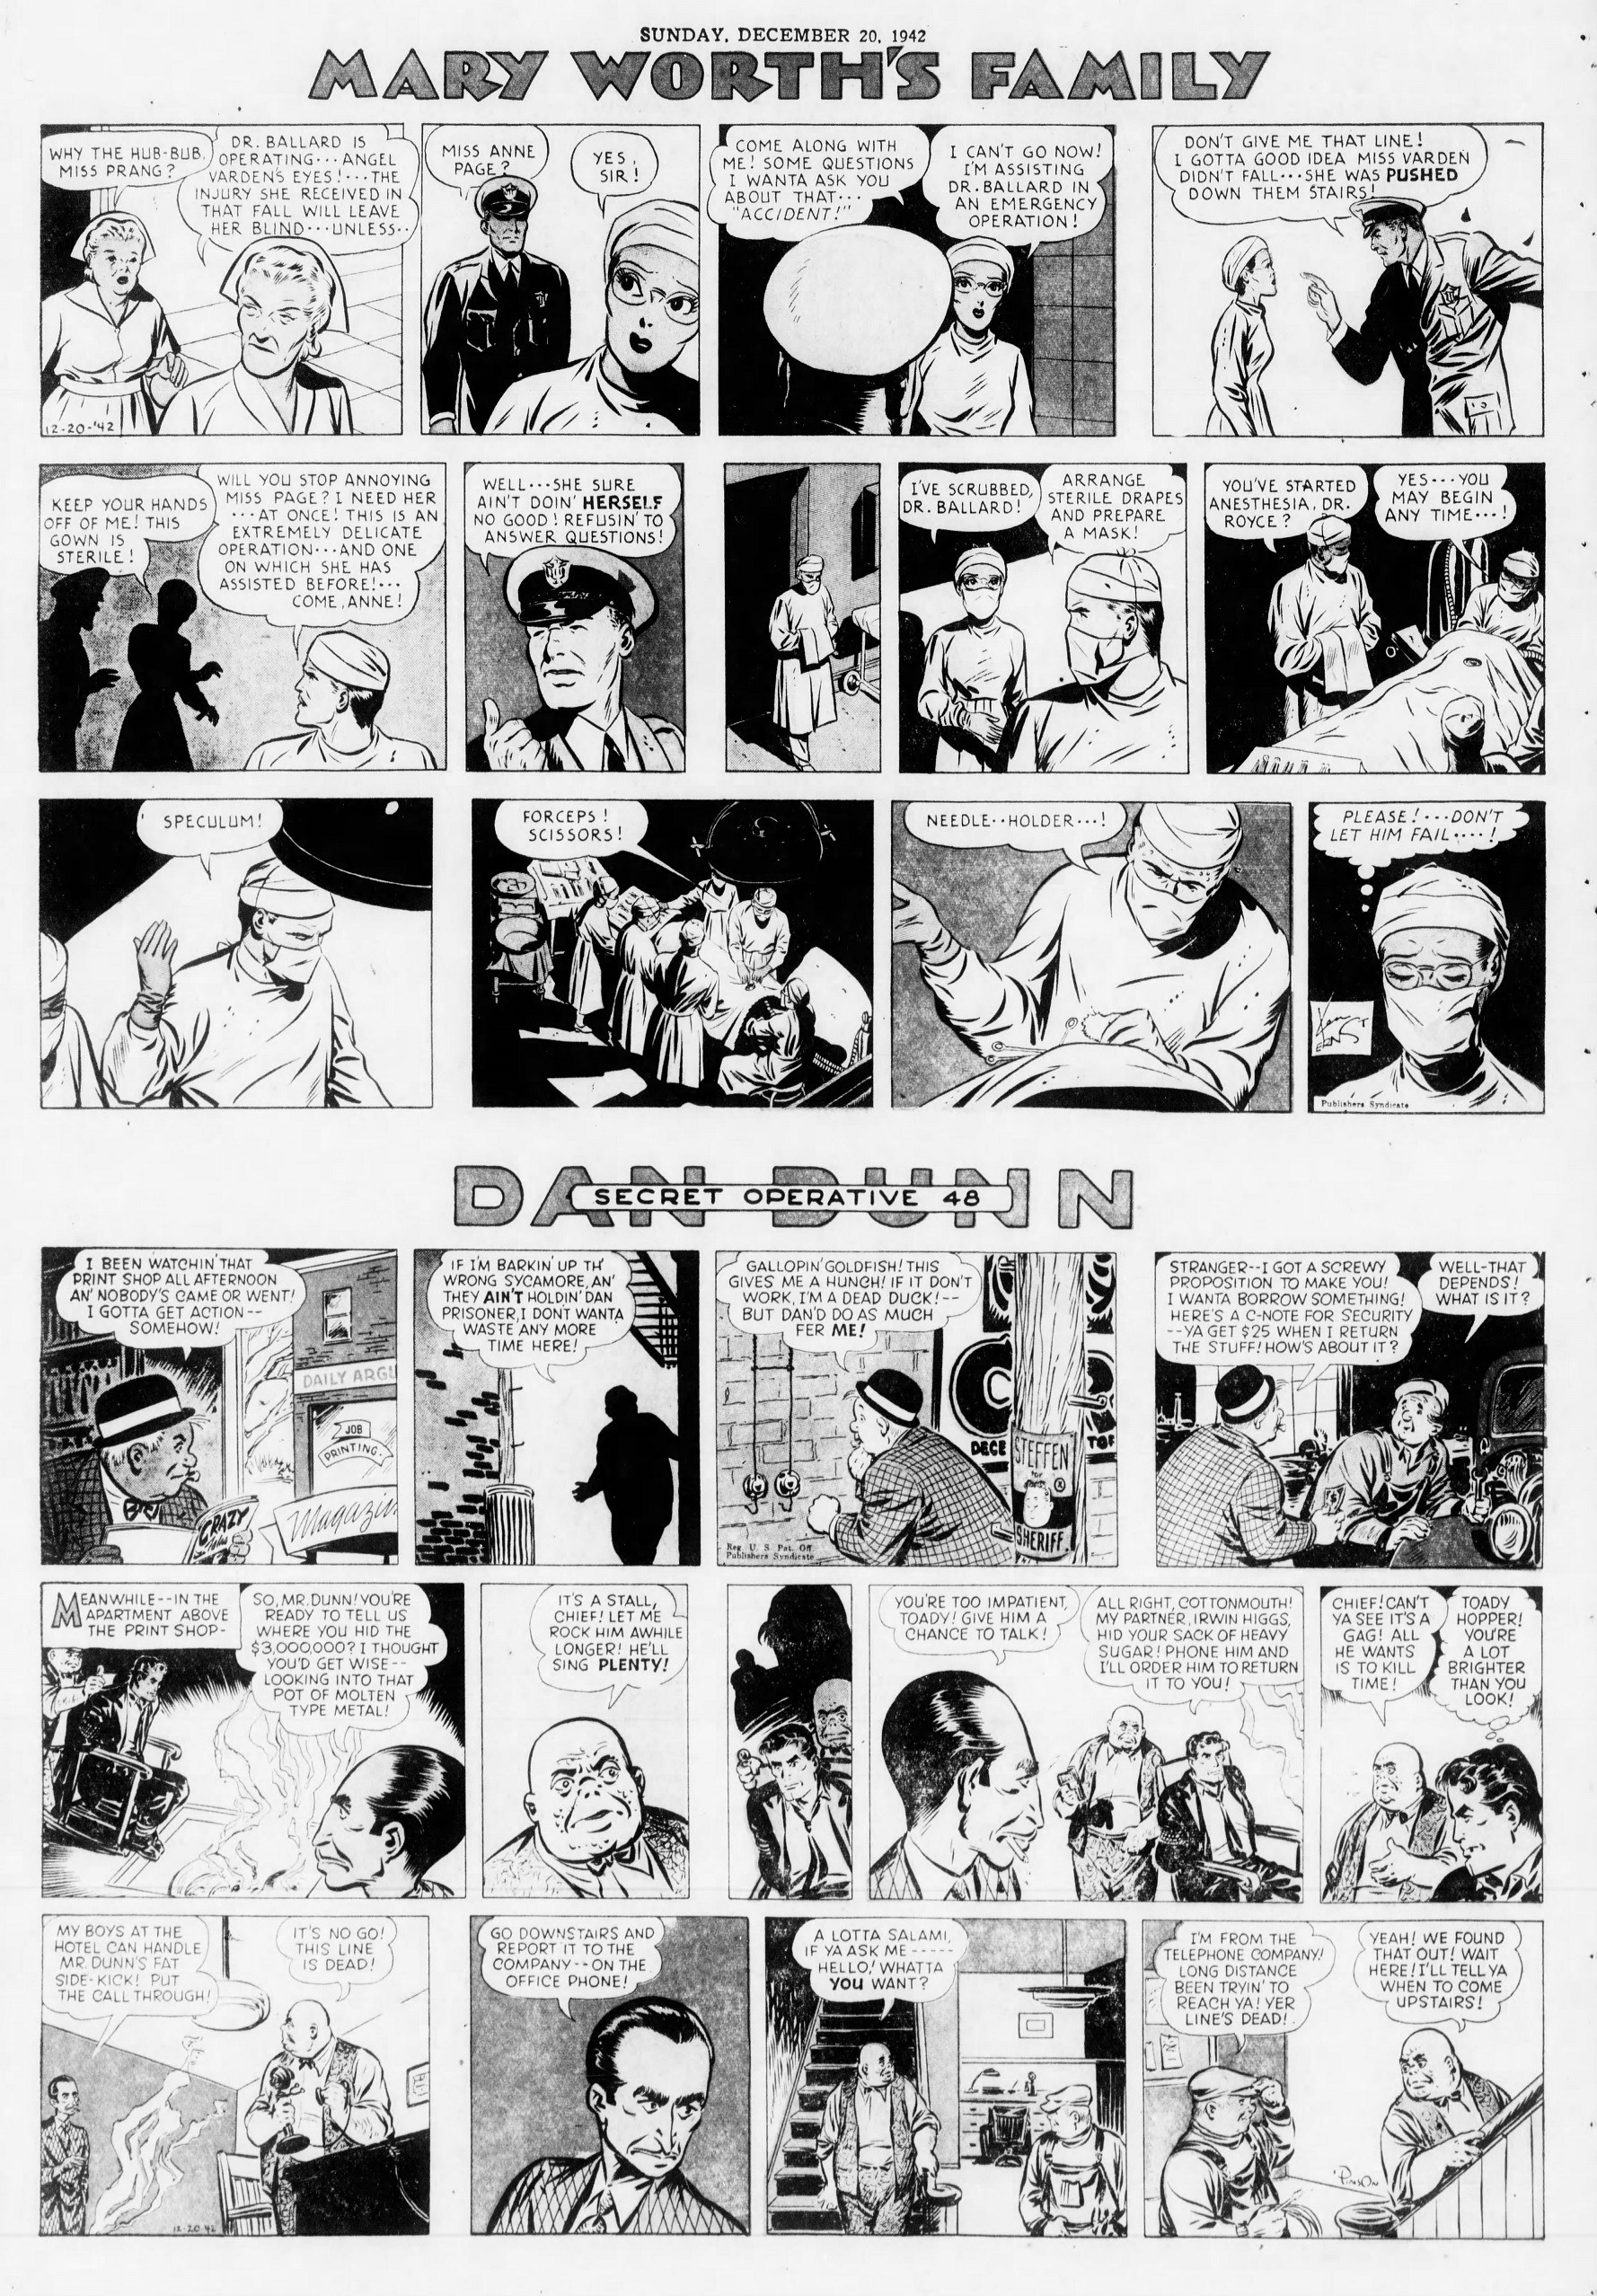 The_Brooklyn_Daily_Eagle_Sun__Dec_20__1942_(9).jpg